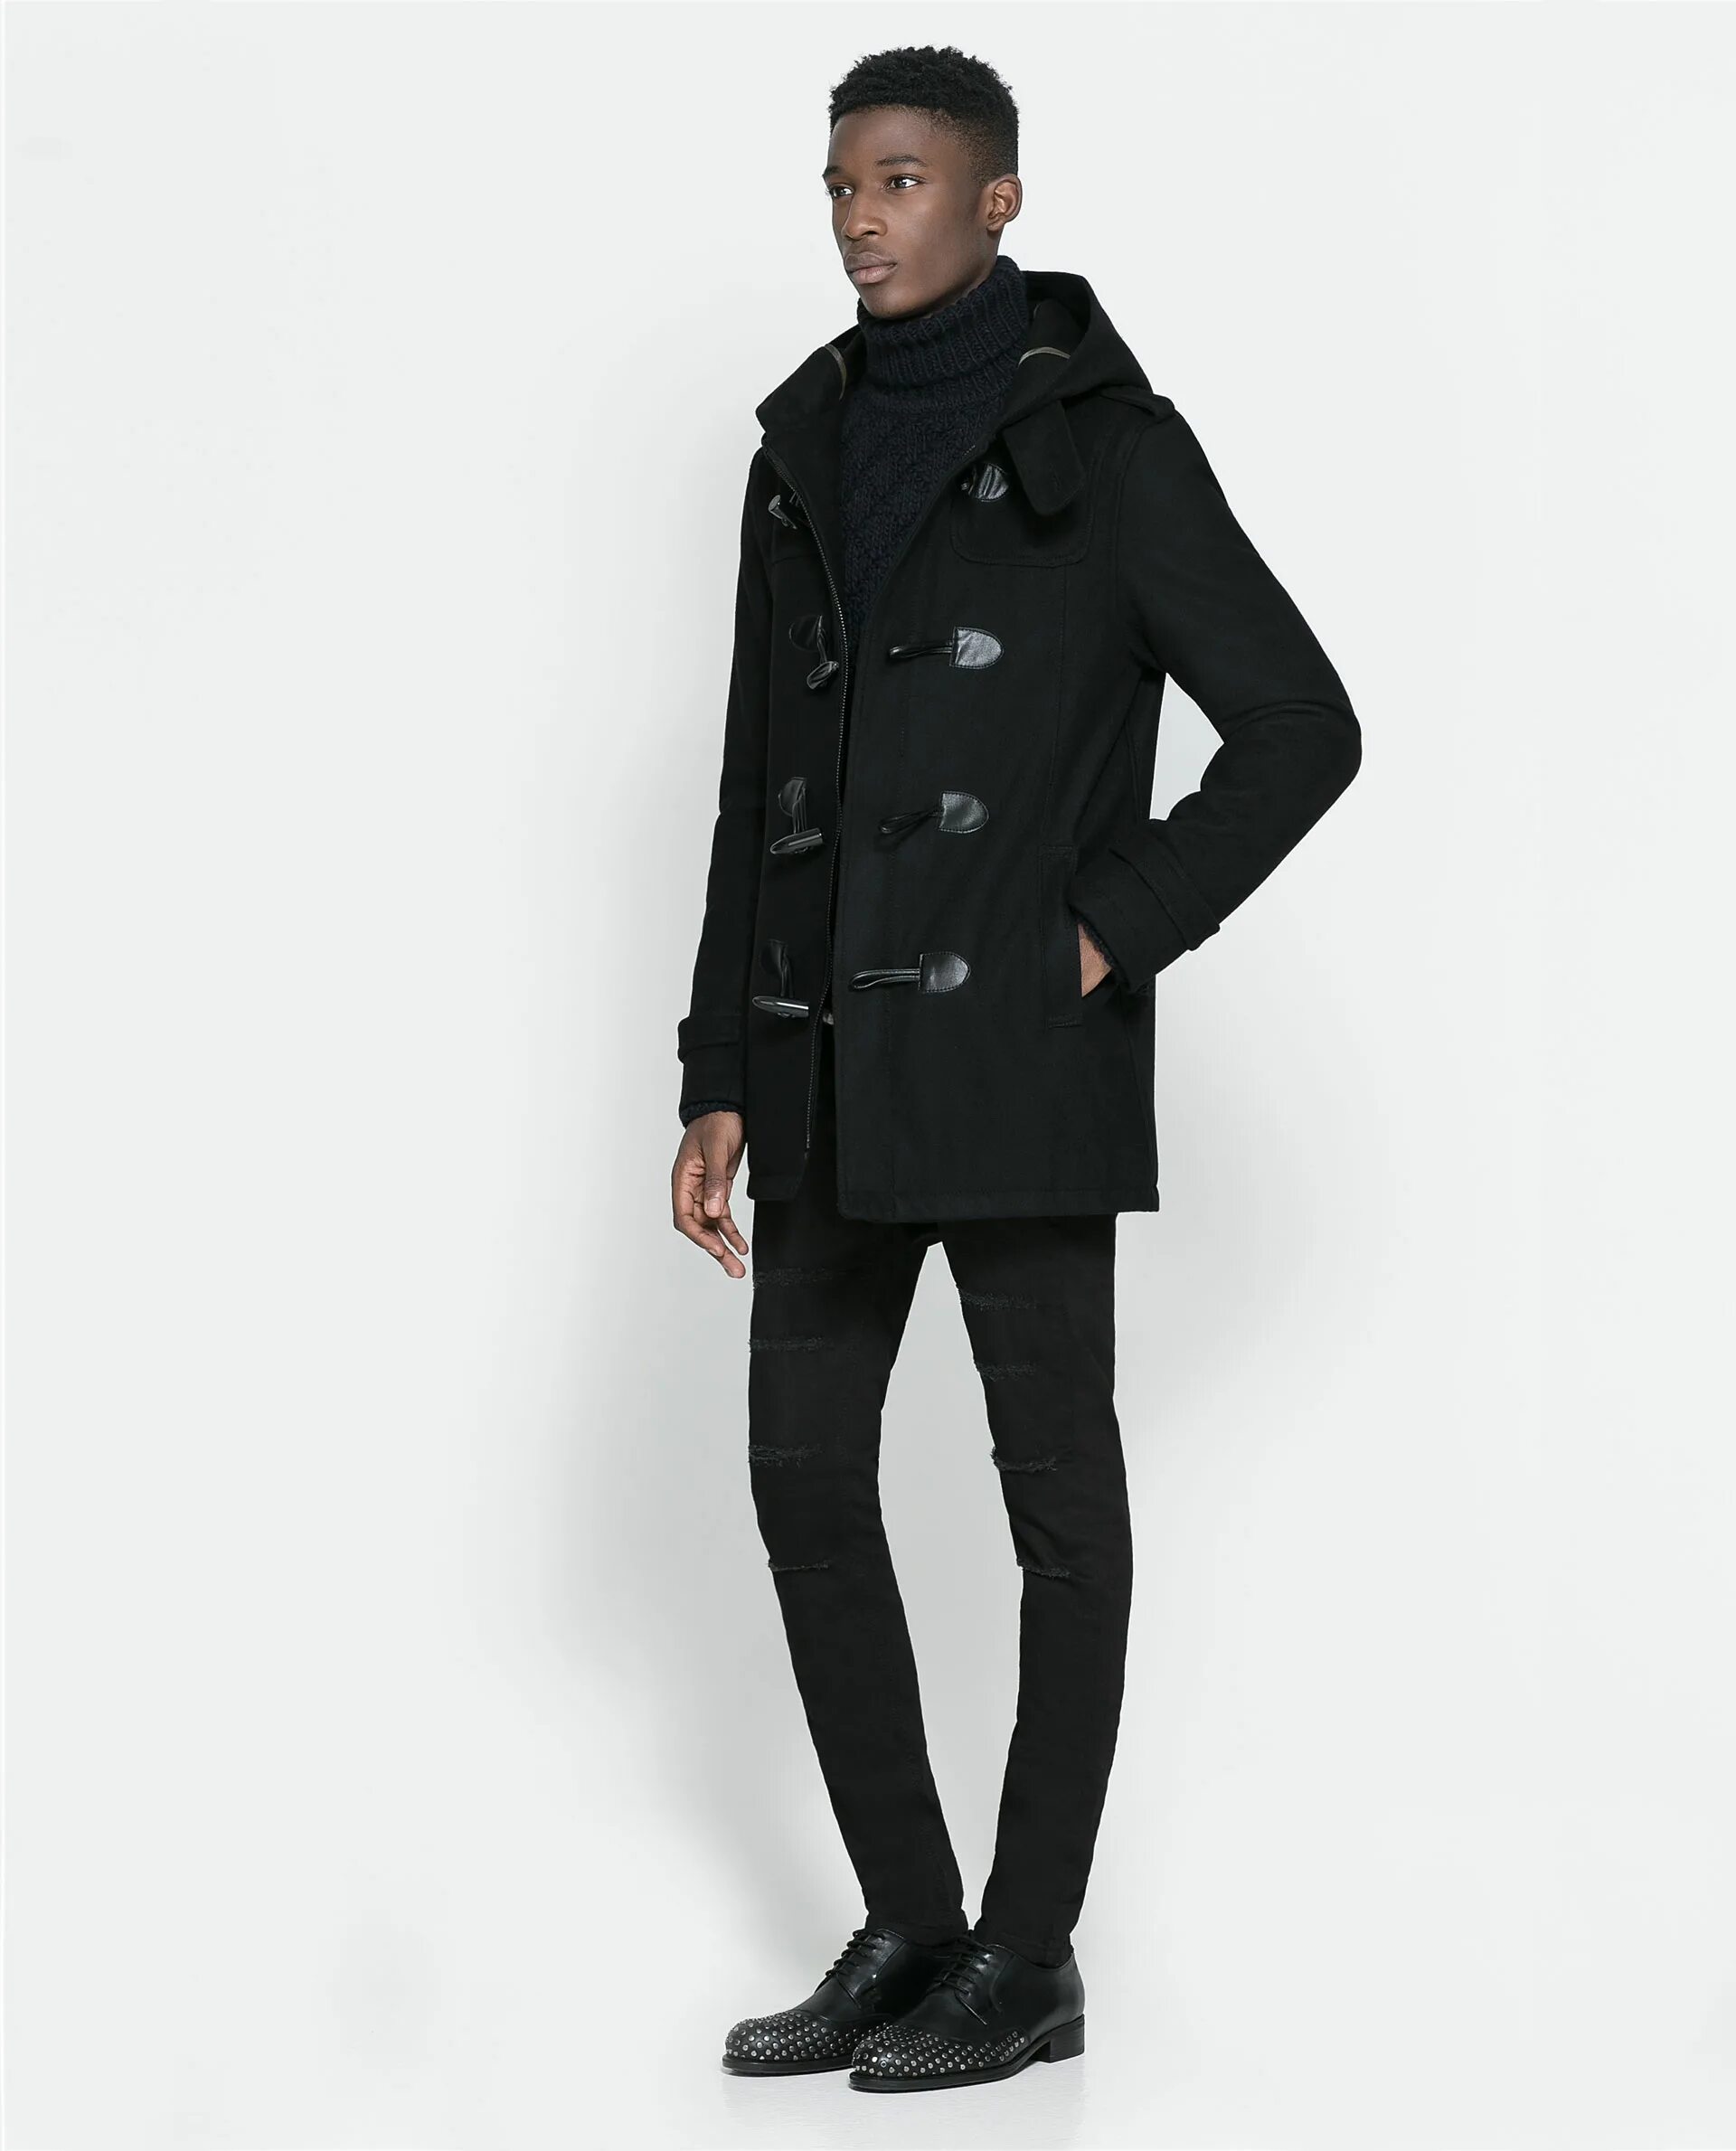 Zara Duffle Coat Mens. Пальто мужское Zara man двухбортовое. Пальто дафлкот черное Zara. Дафлкот пальто мужское Zara men.